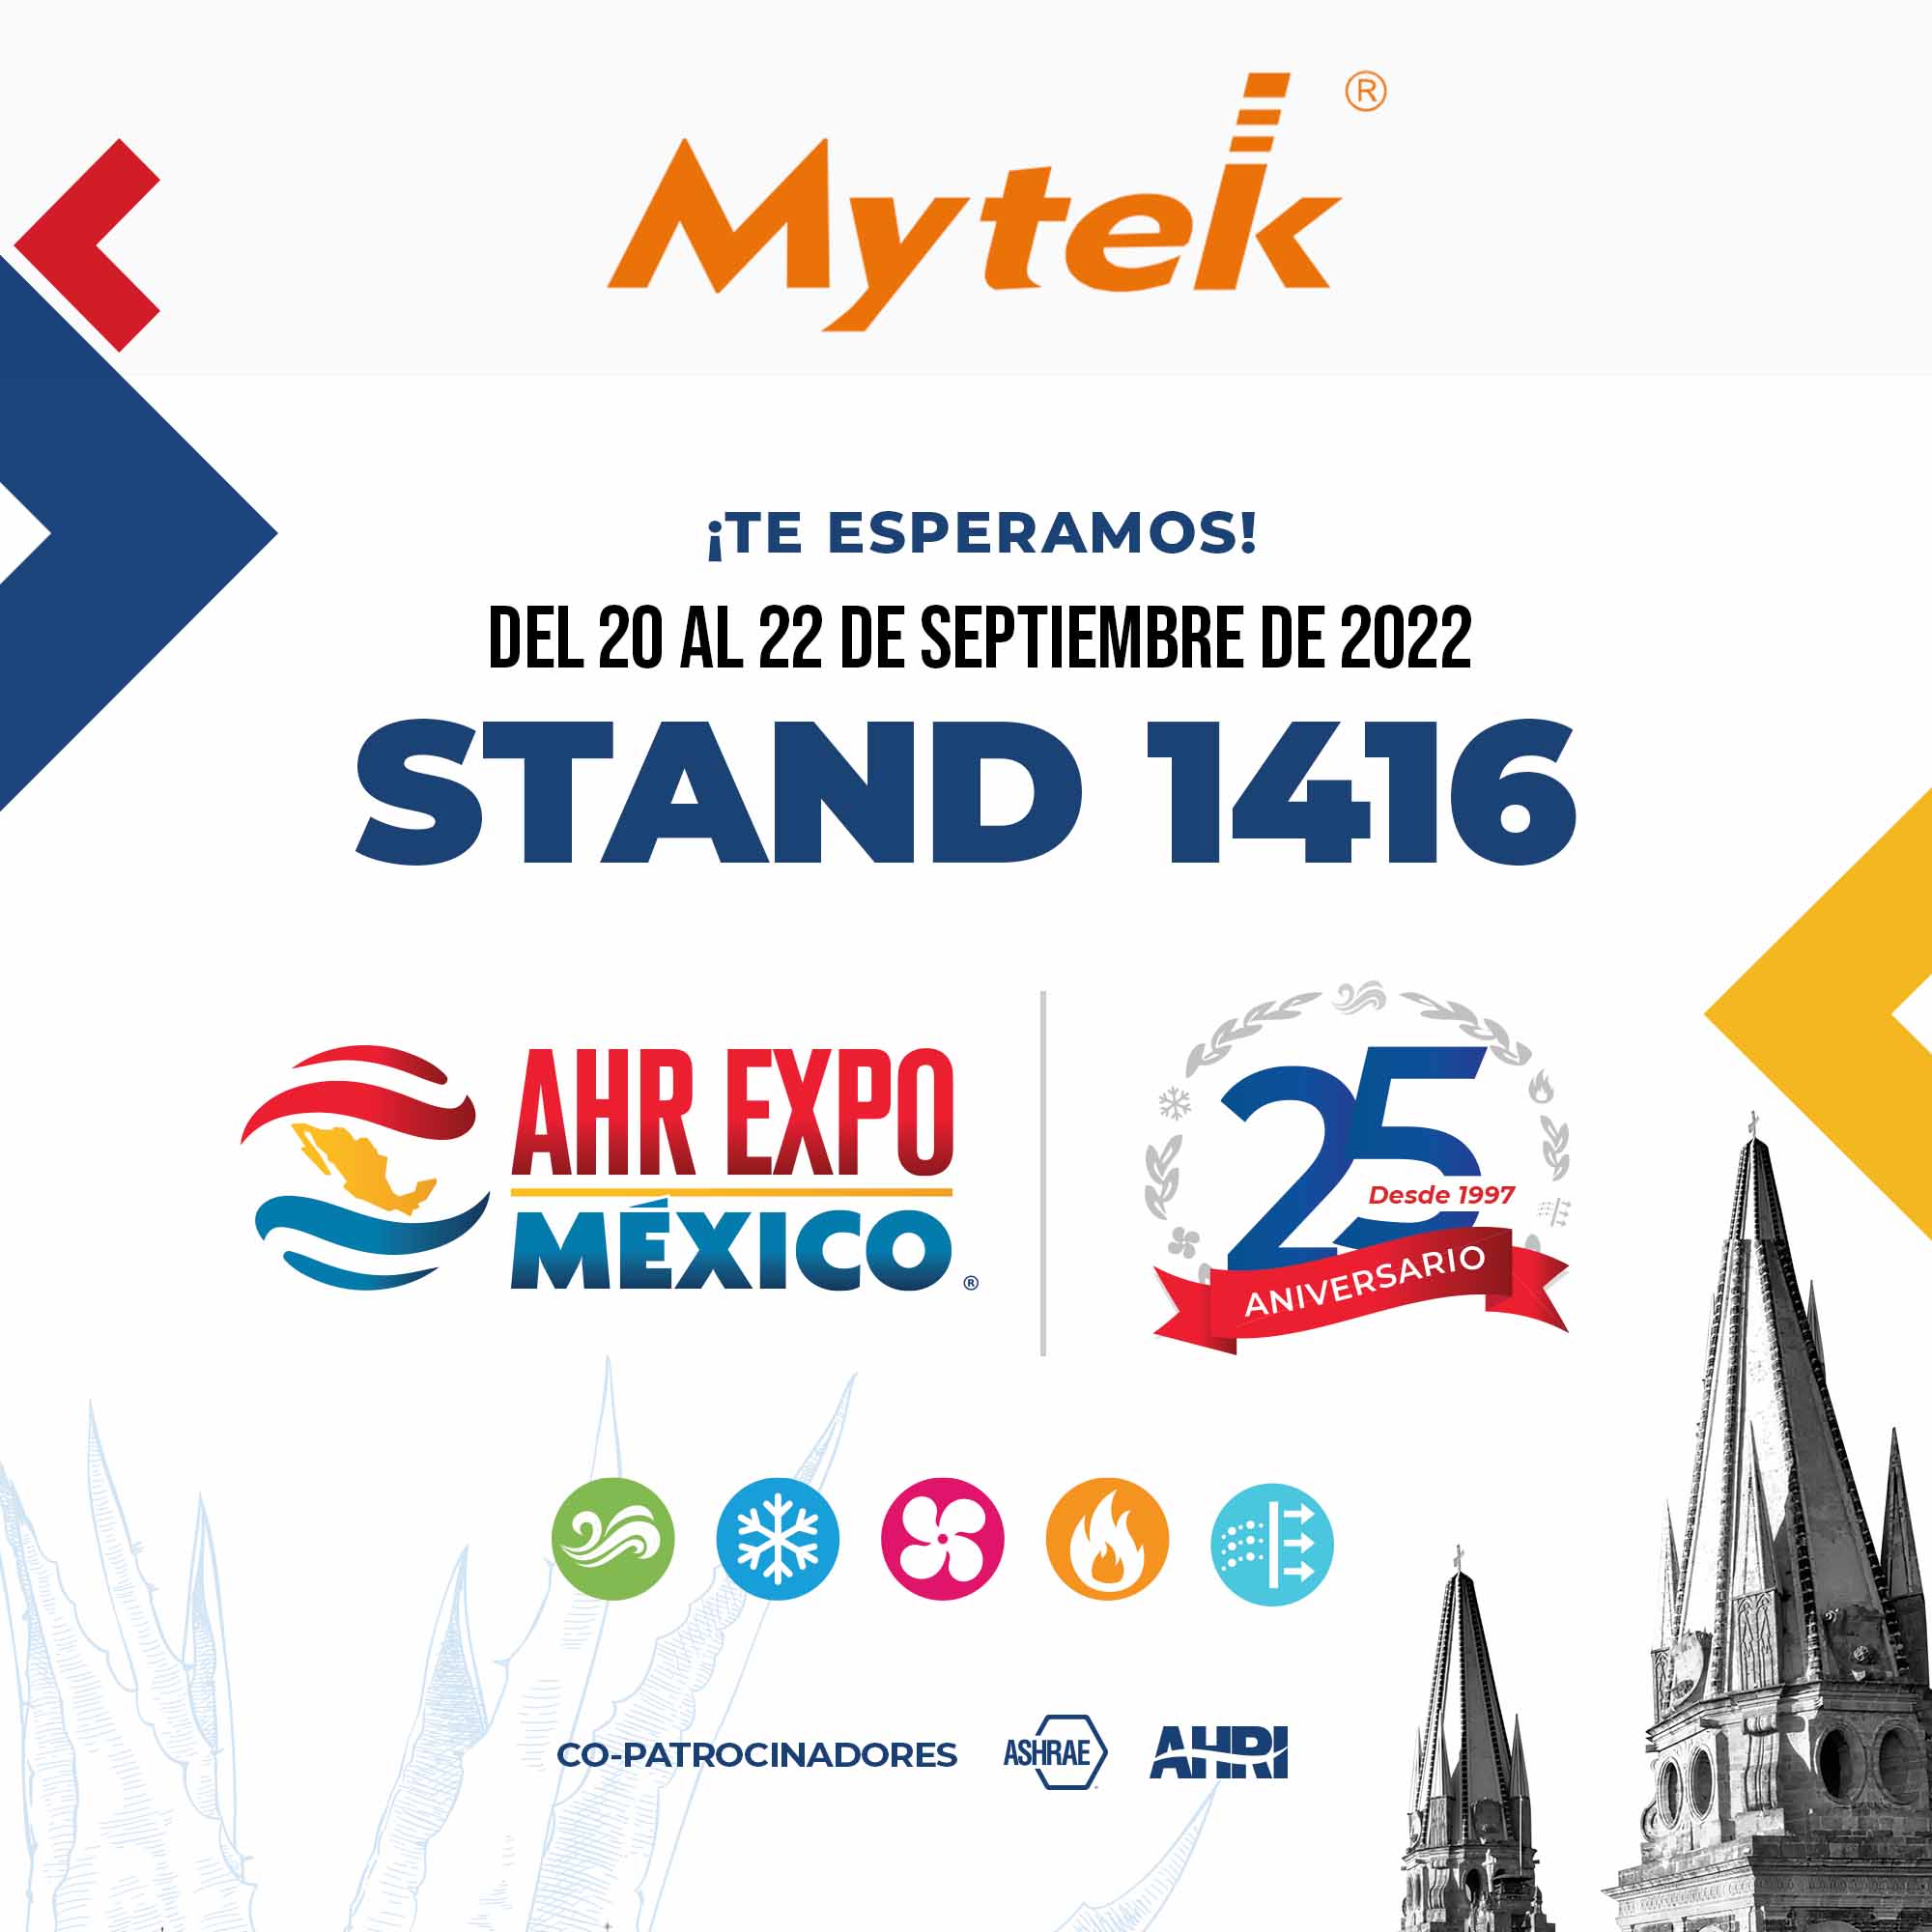 MYTEK PARTICIPARÁ AHR EXPO-MÉXICO® 2022 